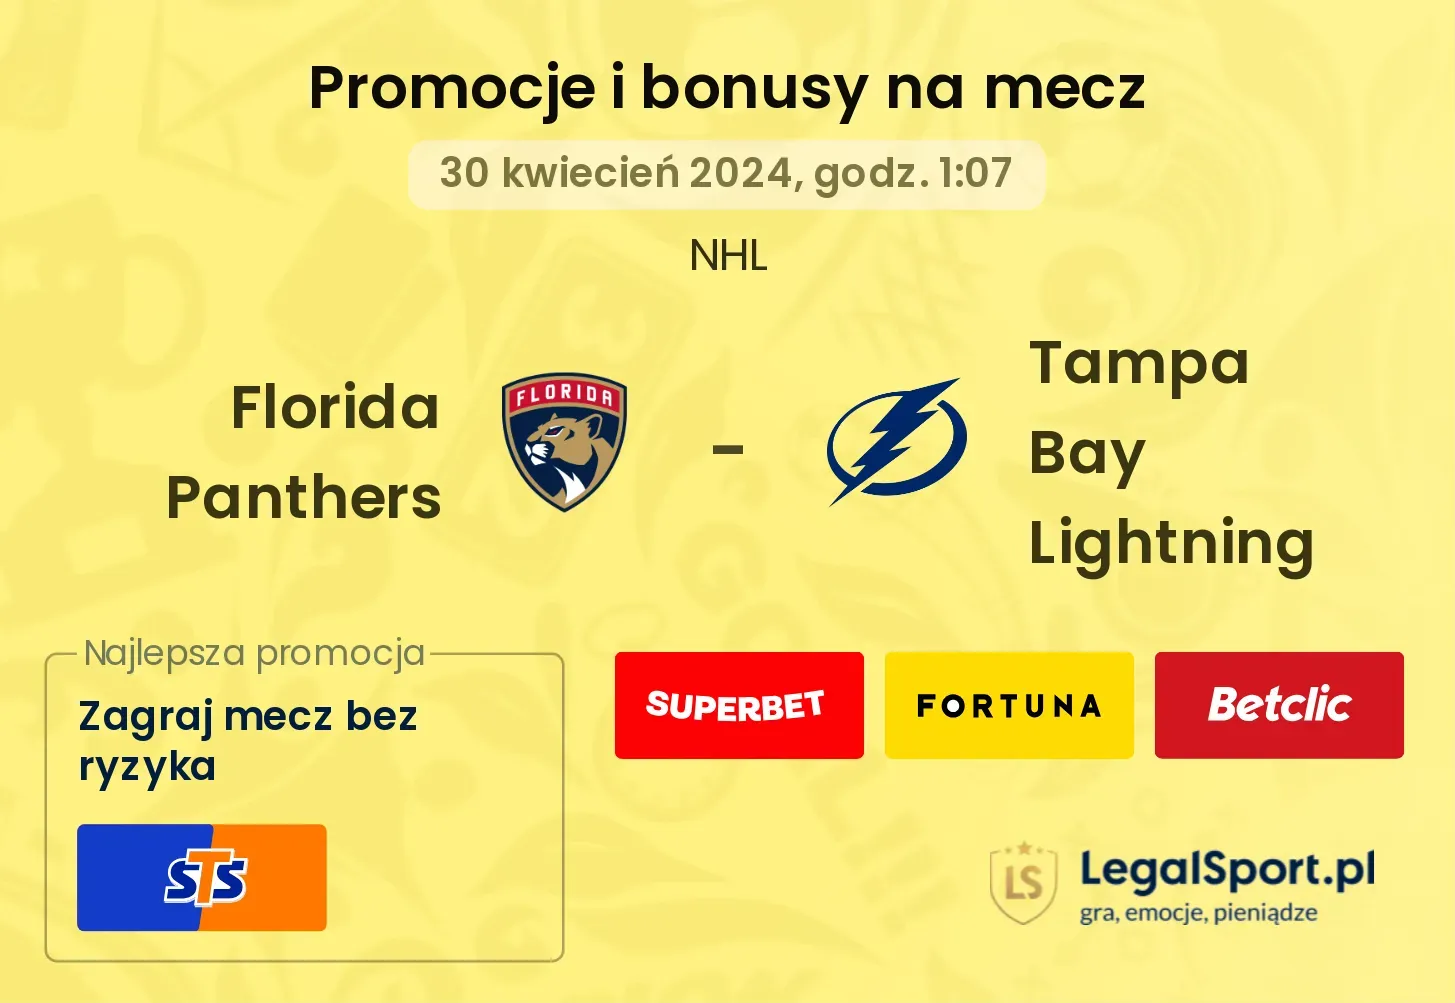 Florida Panthers - Tampa Bay Lightning promocje bonusy na mecz